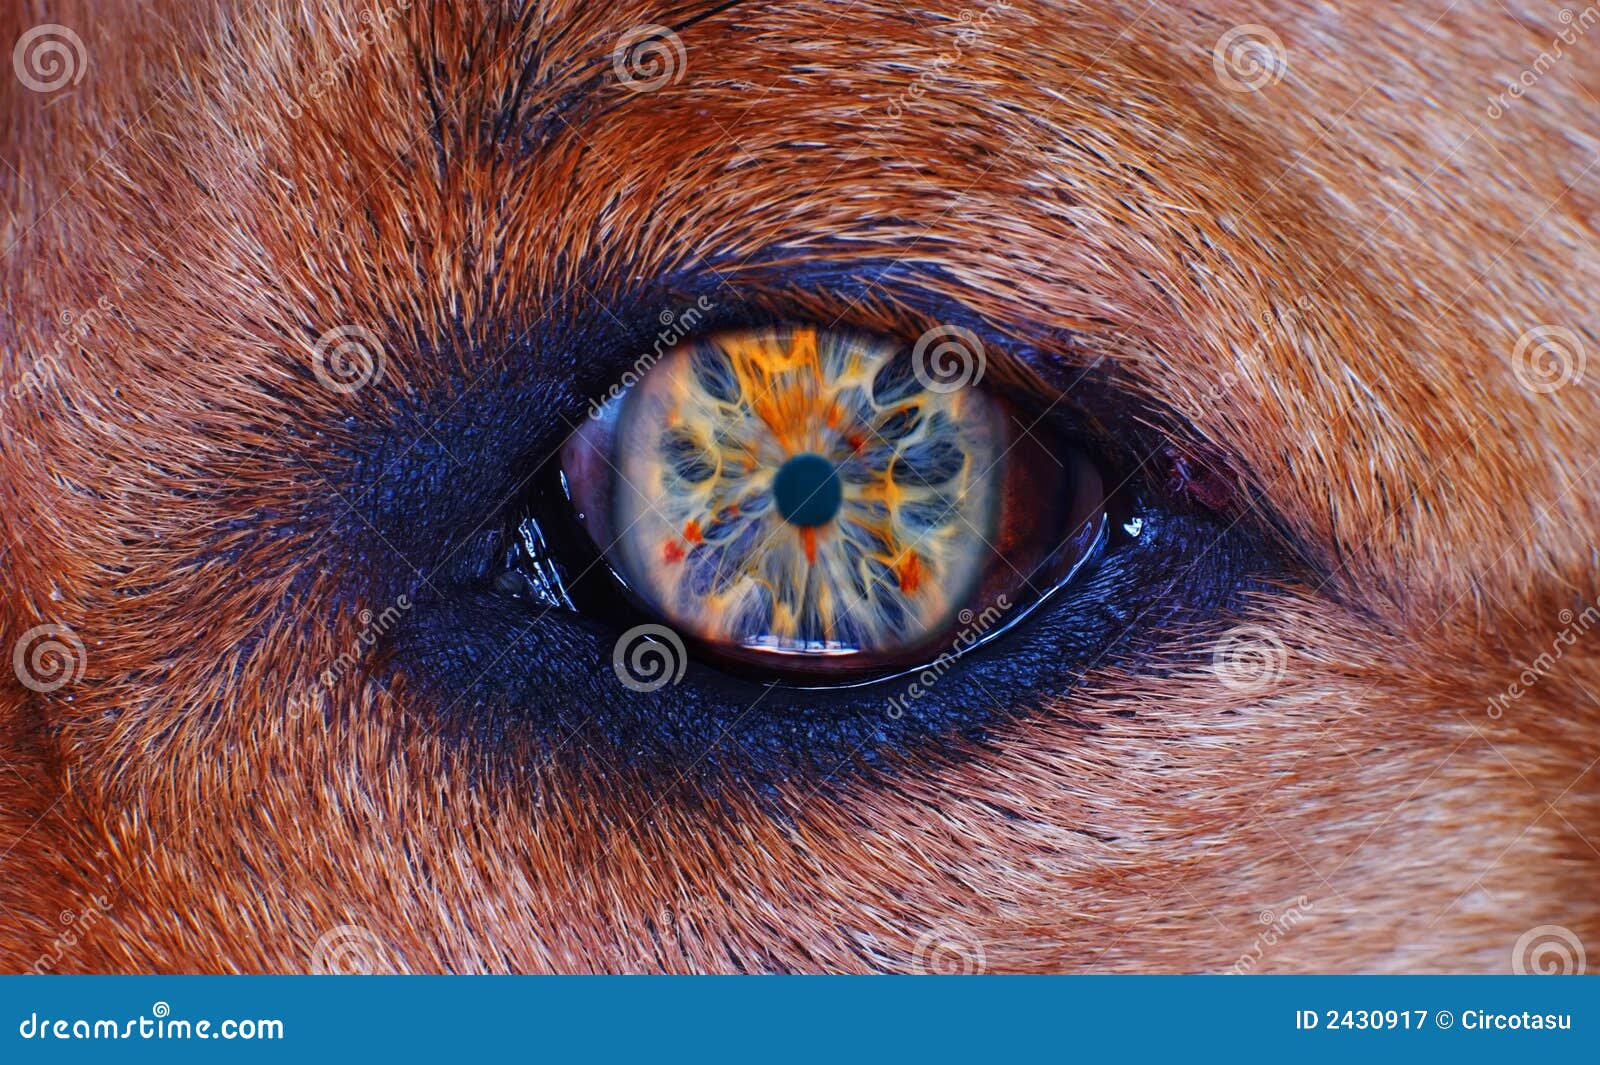 dog eye in macro